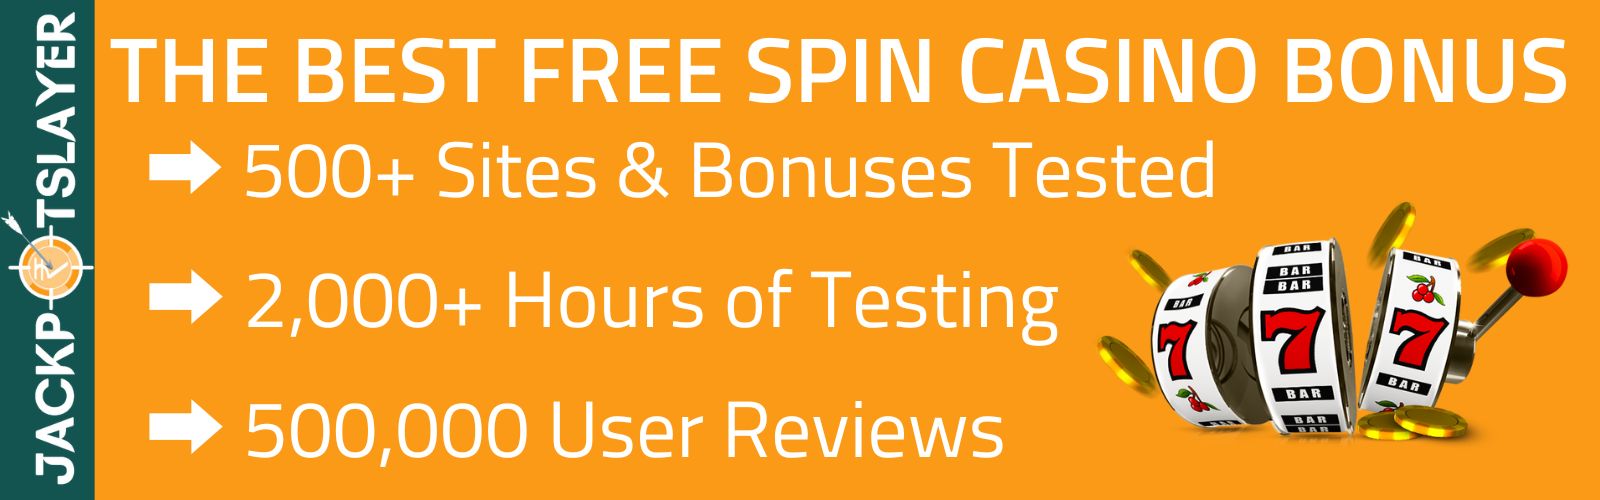 Best Free spin Casino Bonus